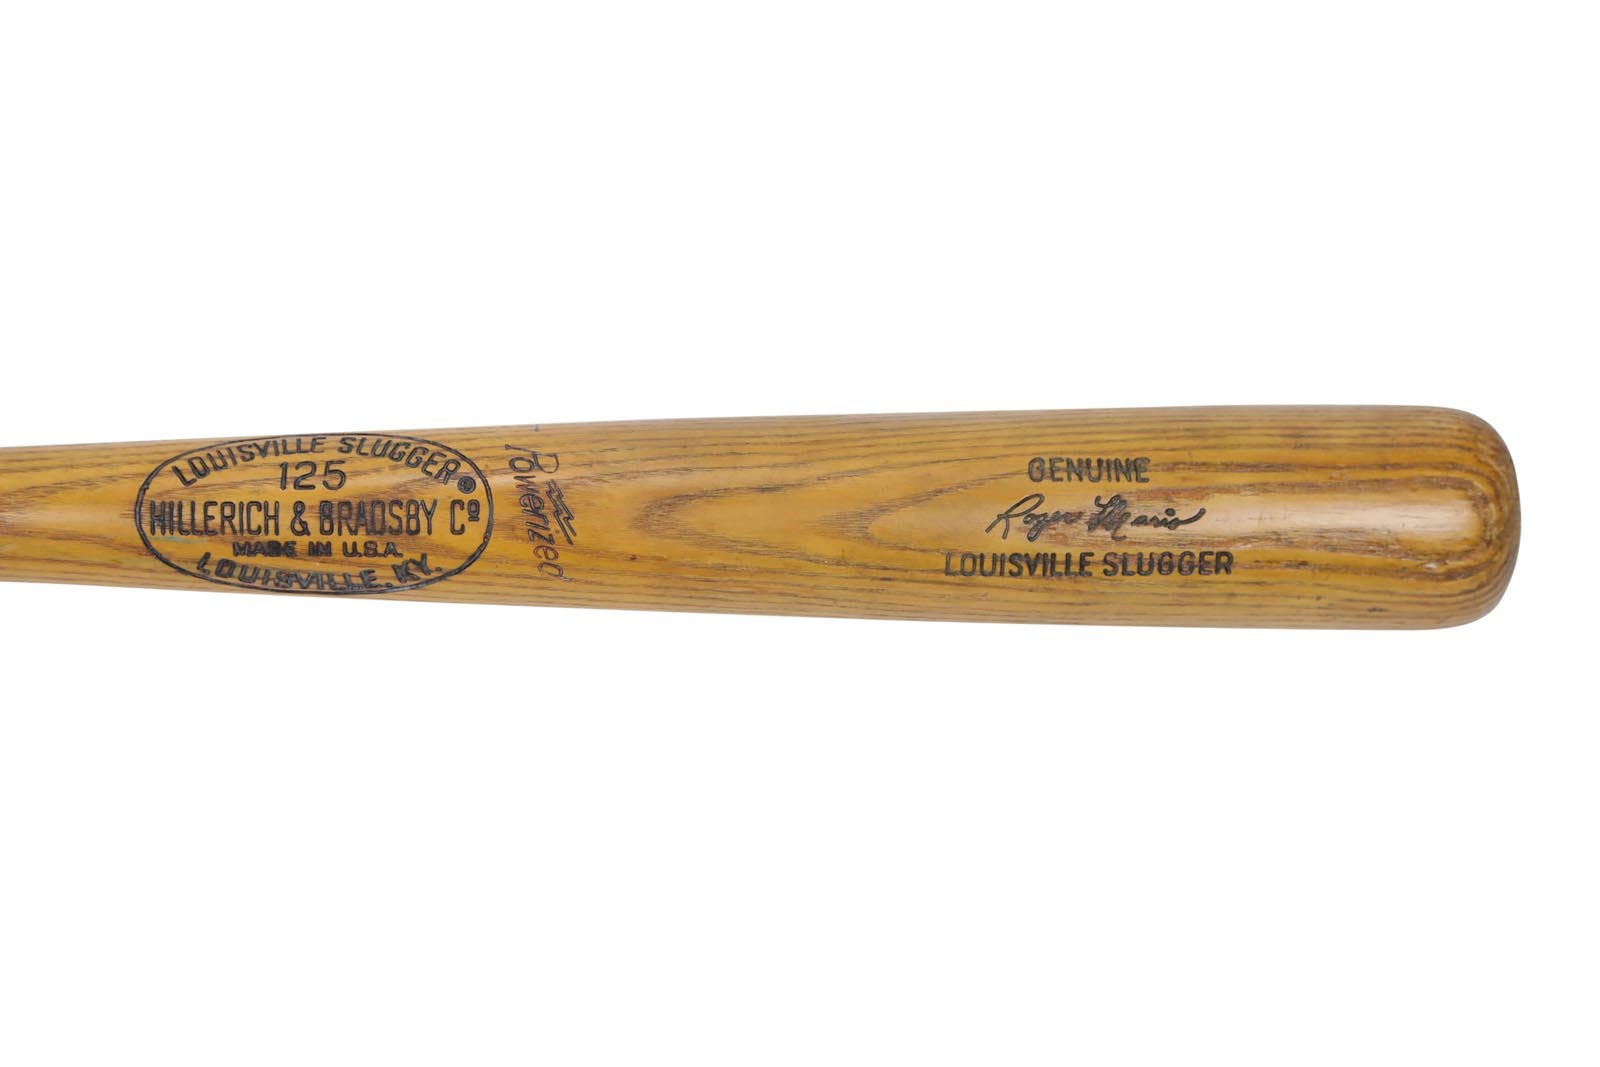 Mantle and Maris - 1967-68 Roger Maris Signed Game Used Bat (PSA GU 8)